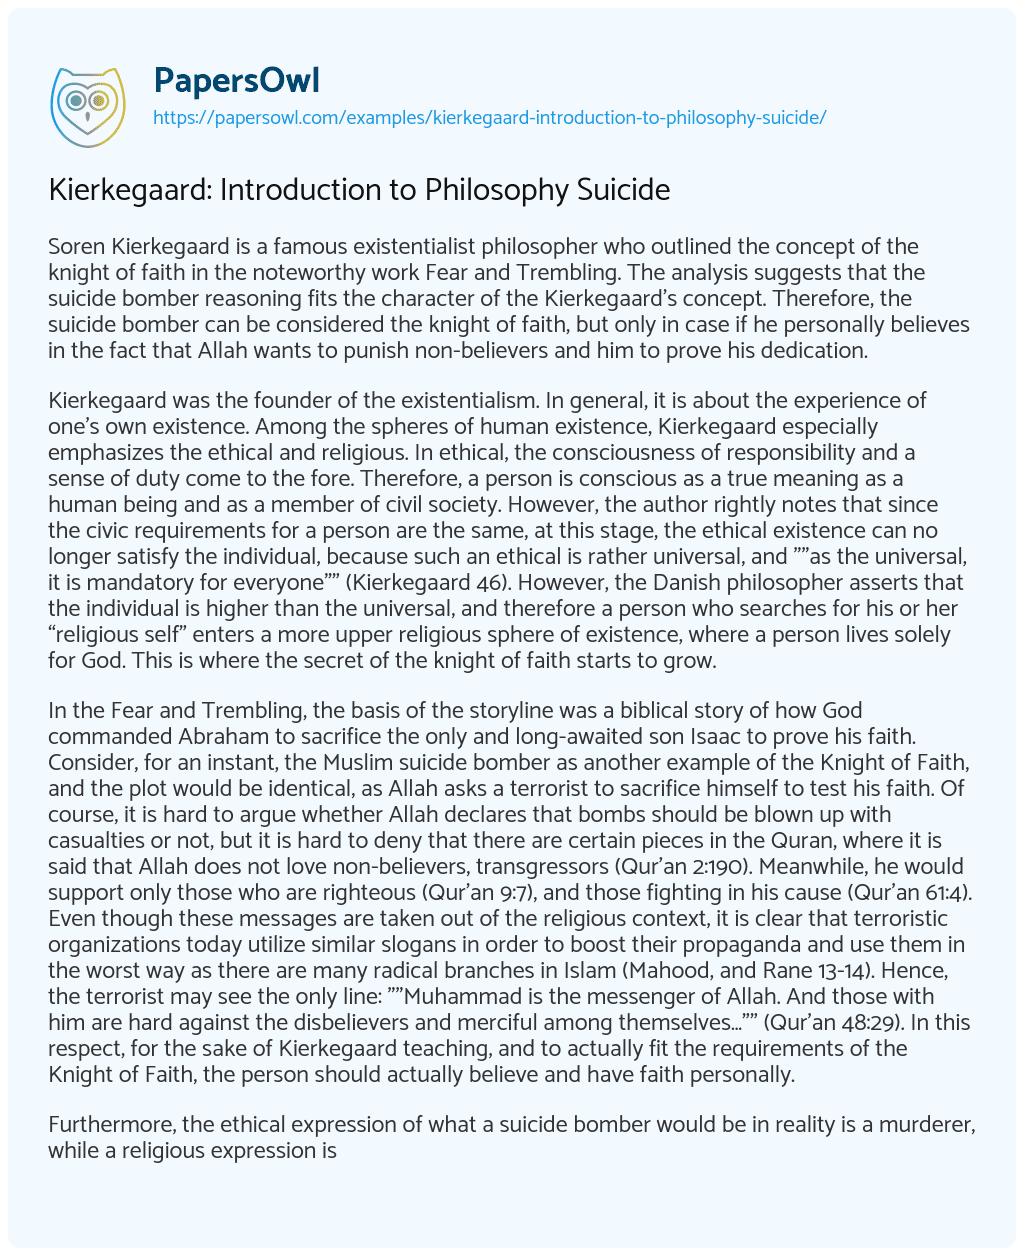 Essay on Kierkegaard: Introduction to Philosophy Suicide